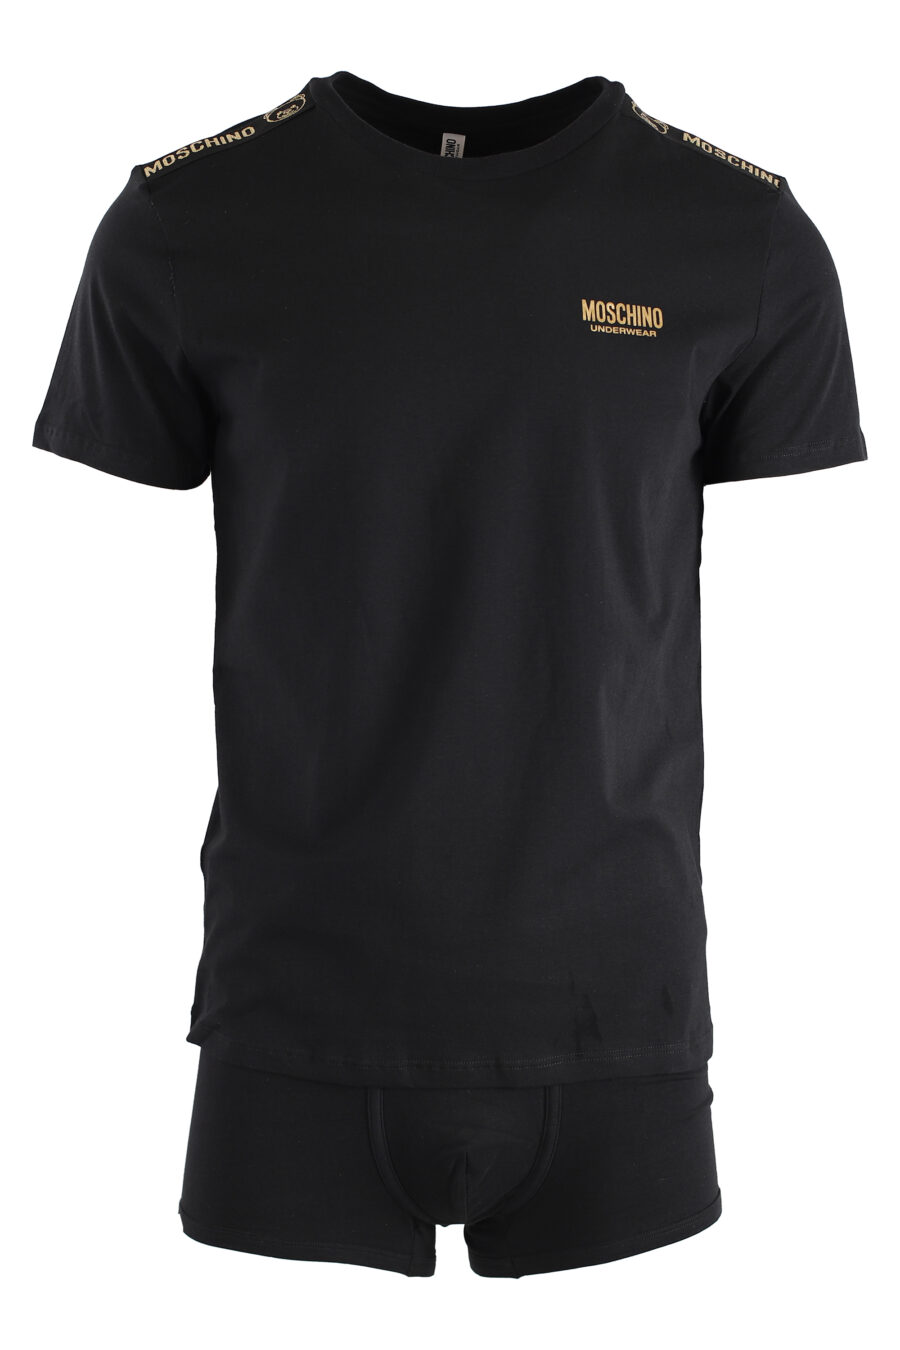 Set de camiseta y boxer negro con minilogo dorado - IMG 7600